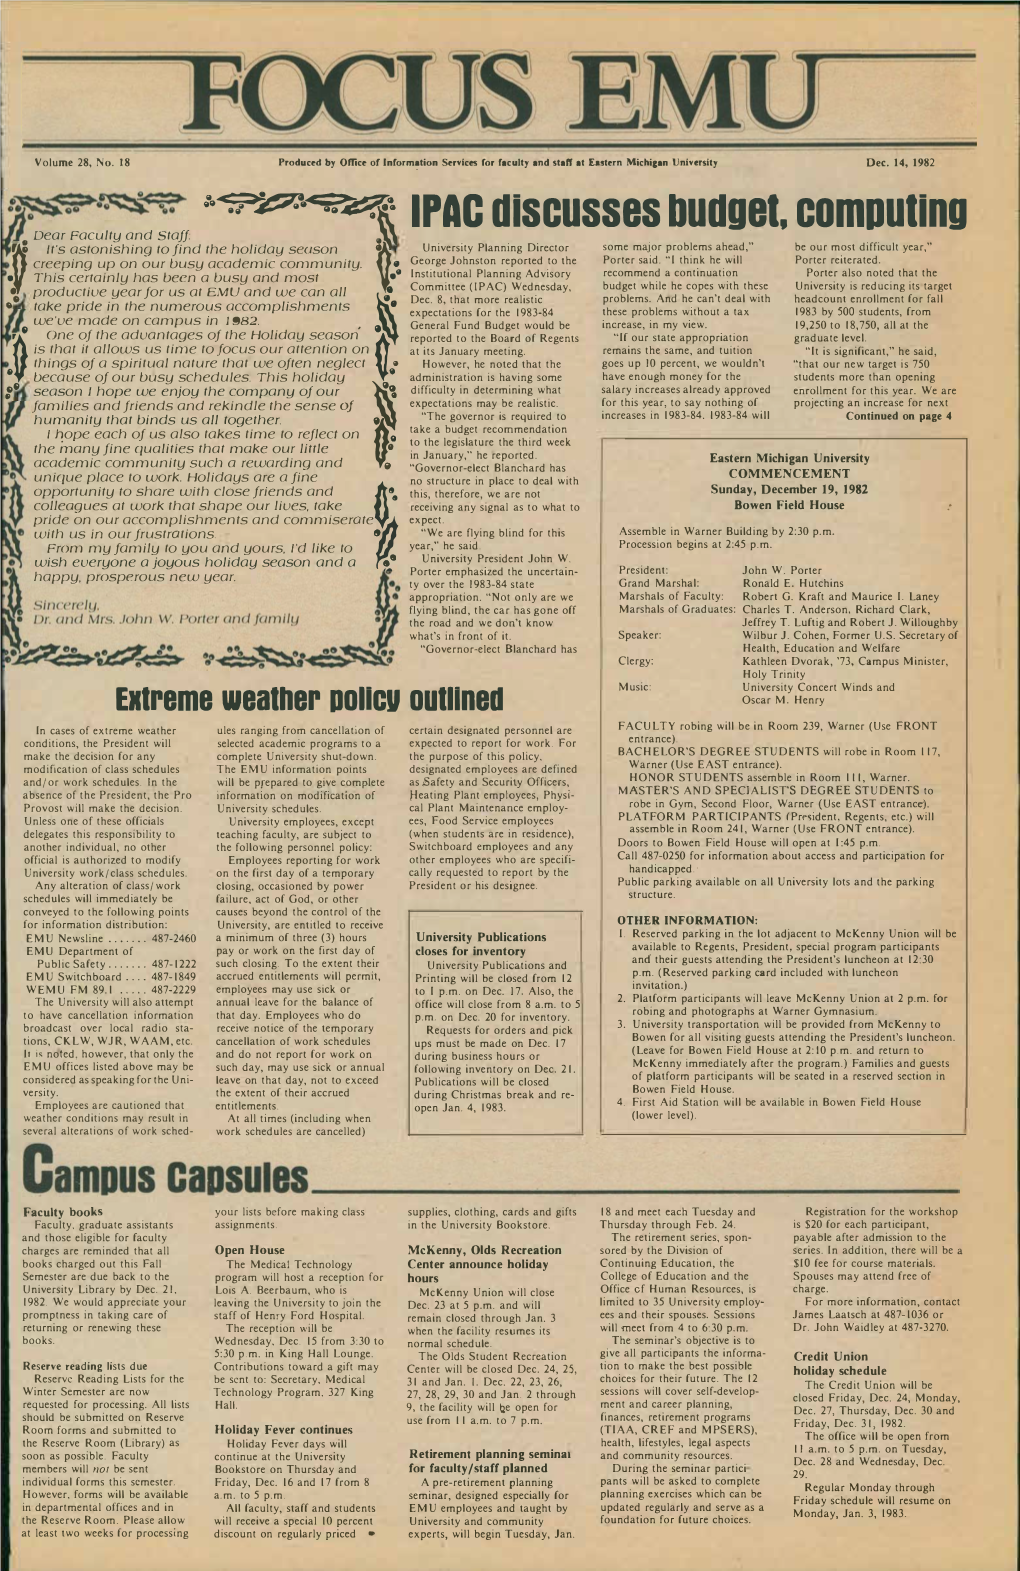 Focus EMU, December 14, 1982